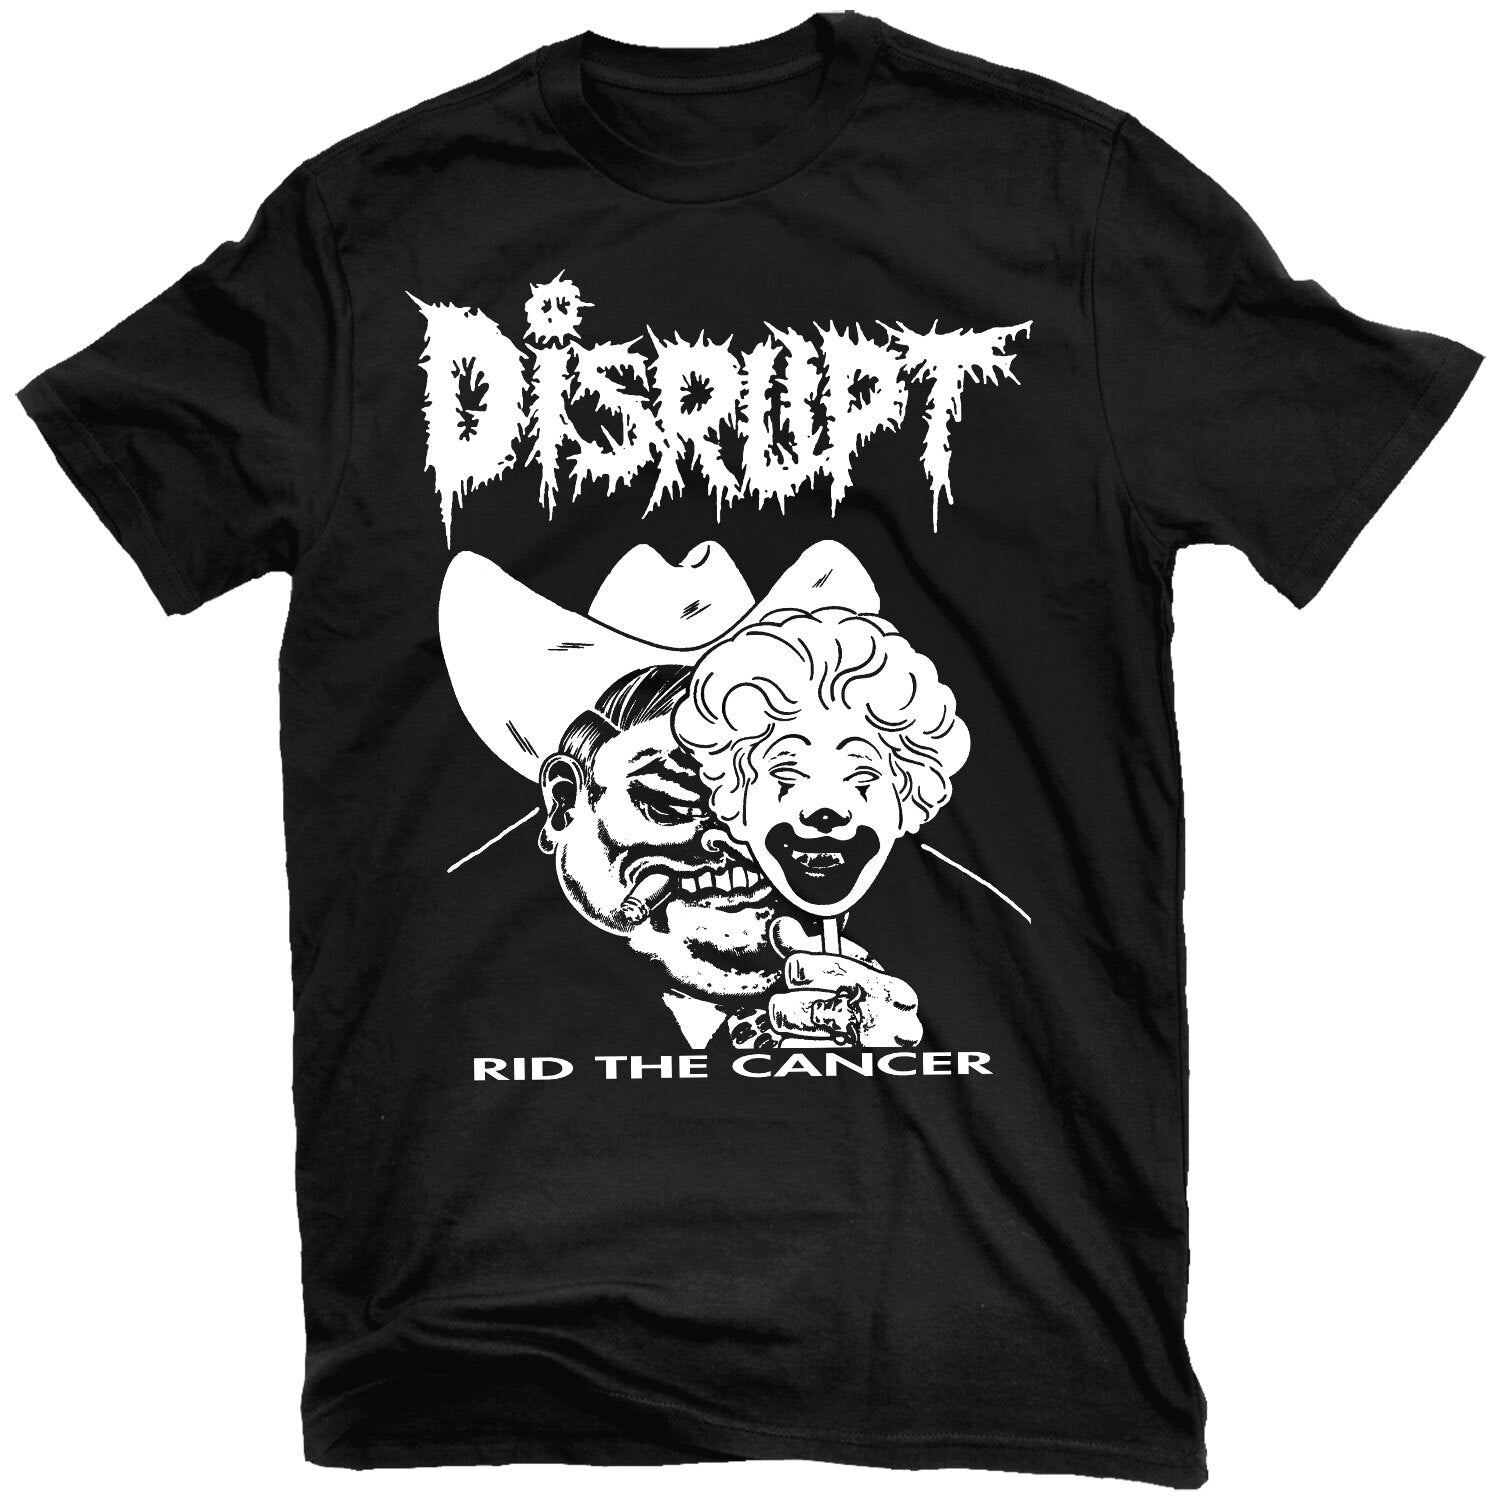 Disrupt "Rid The Cancer" T-Shirt